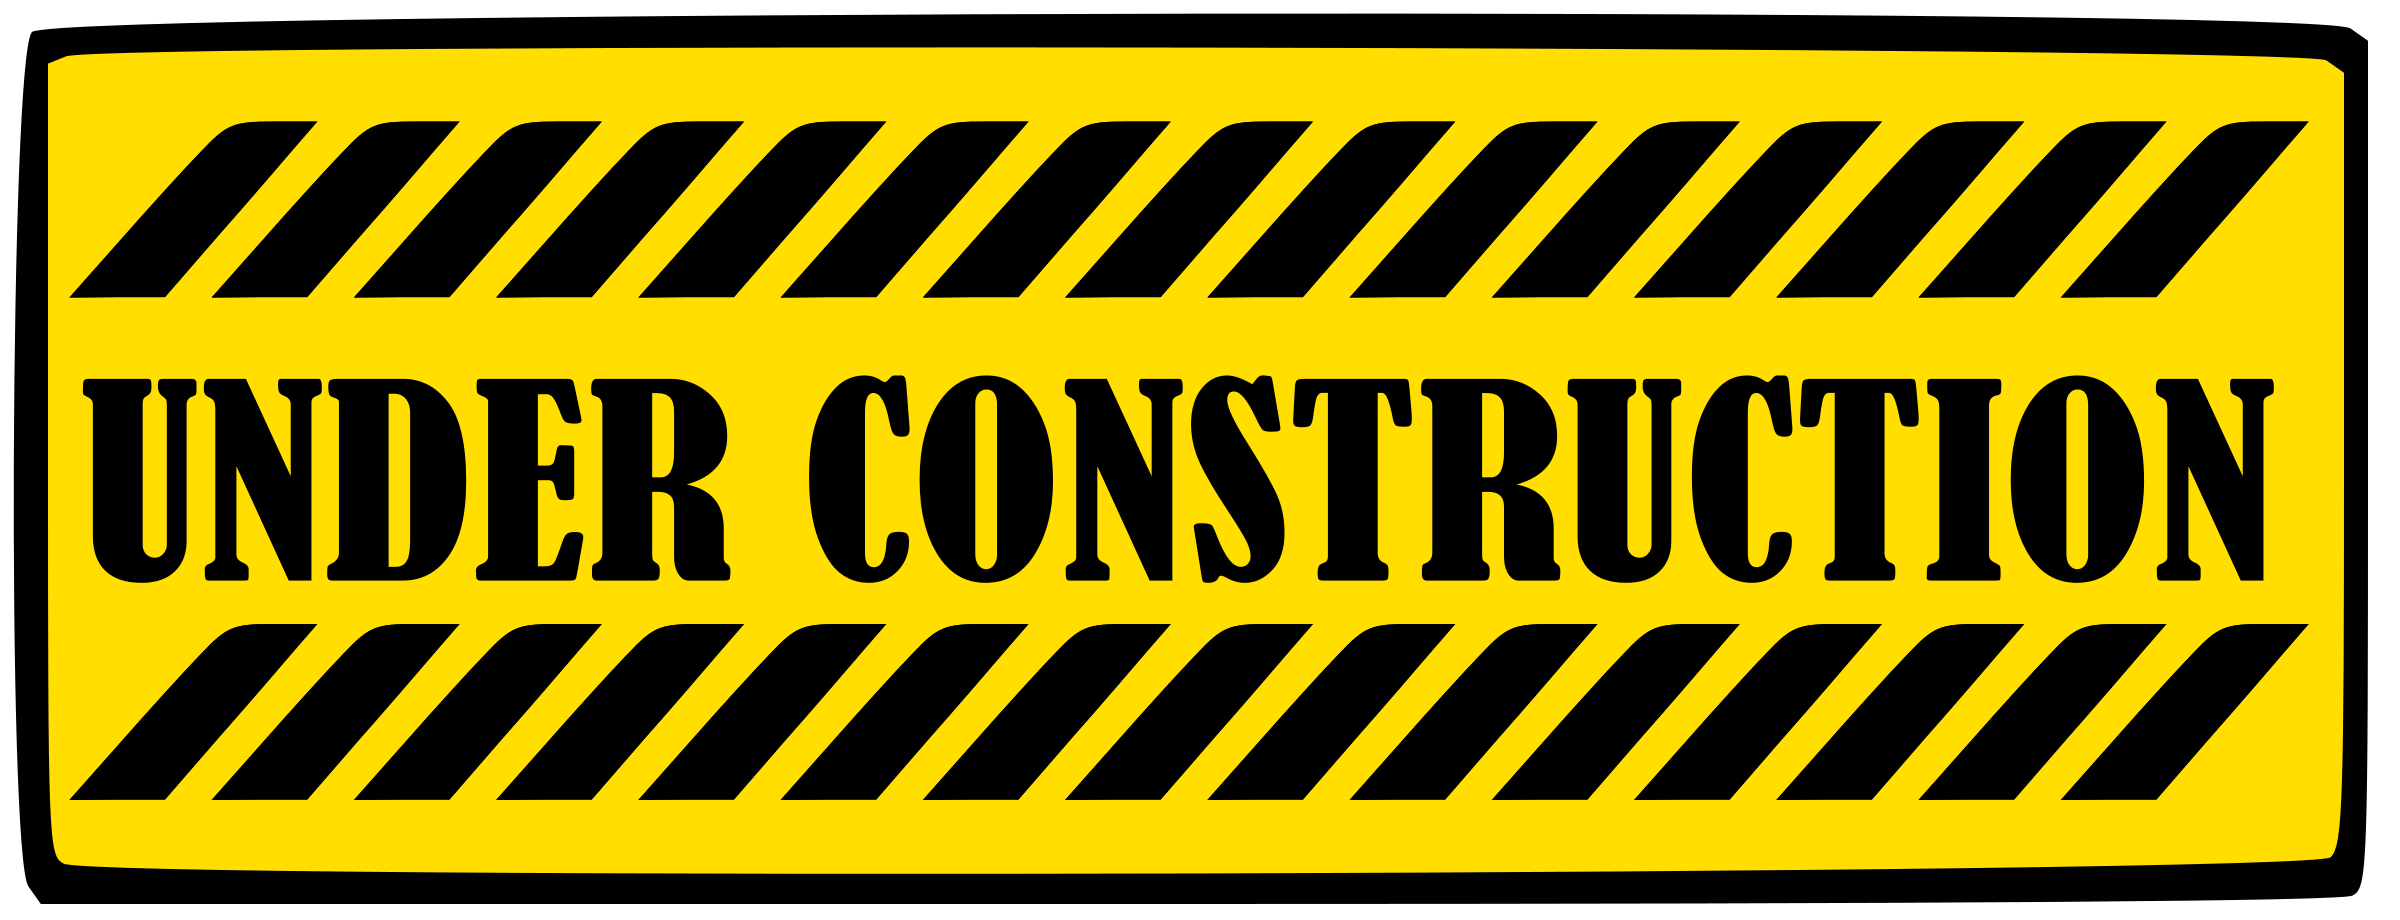 under construction signs clip art - photo #27